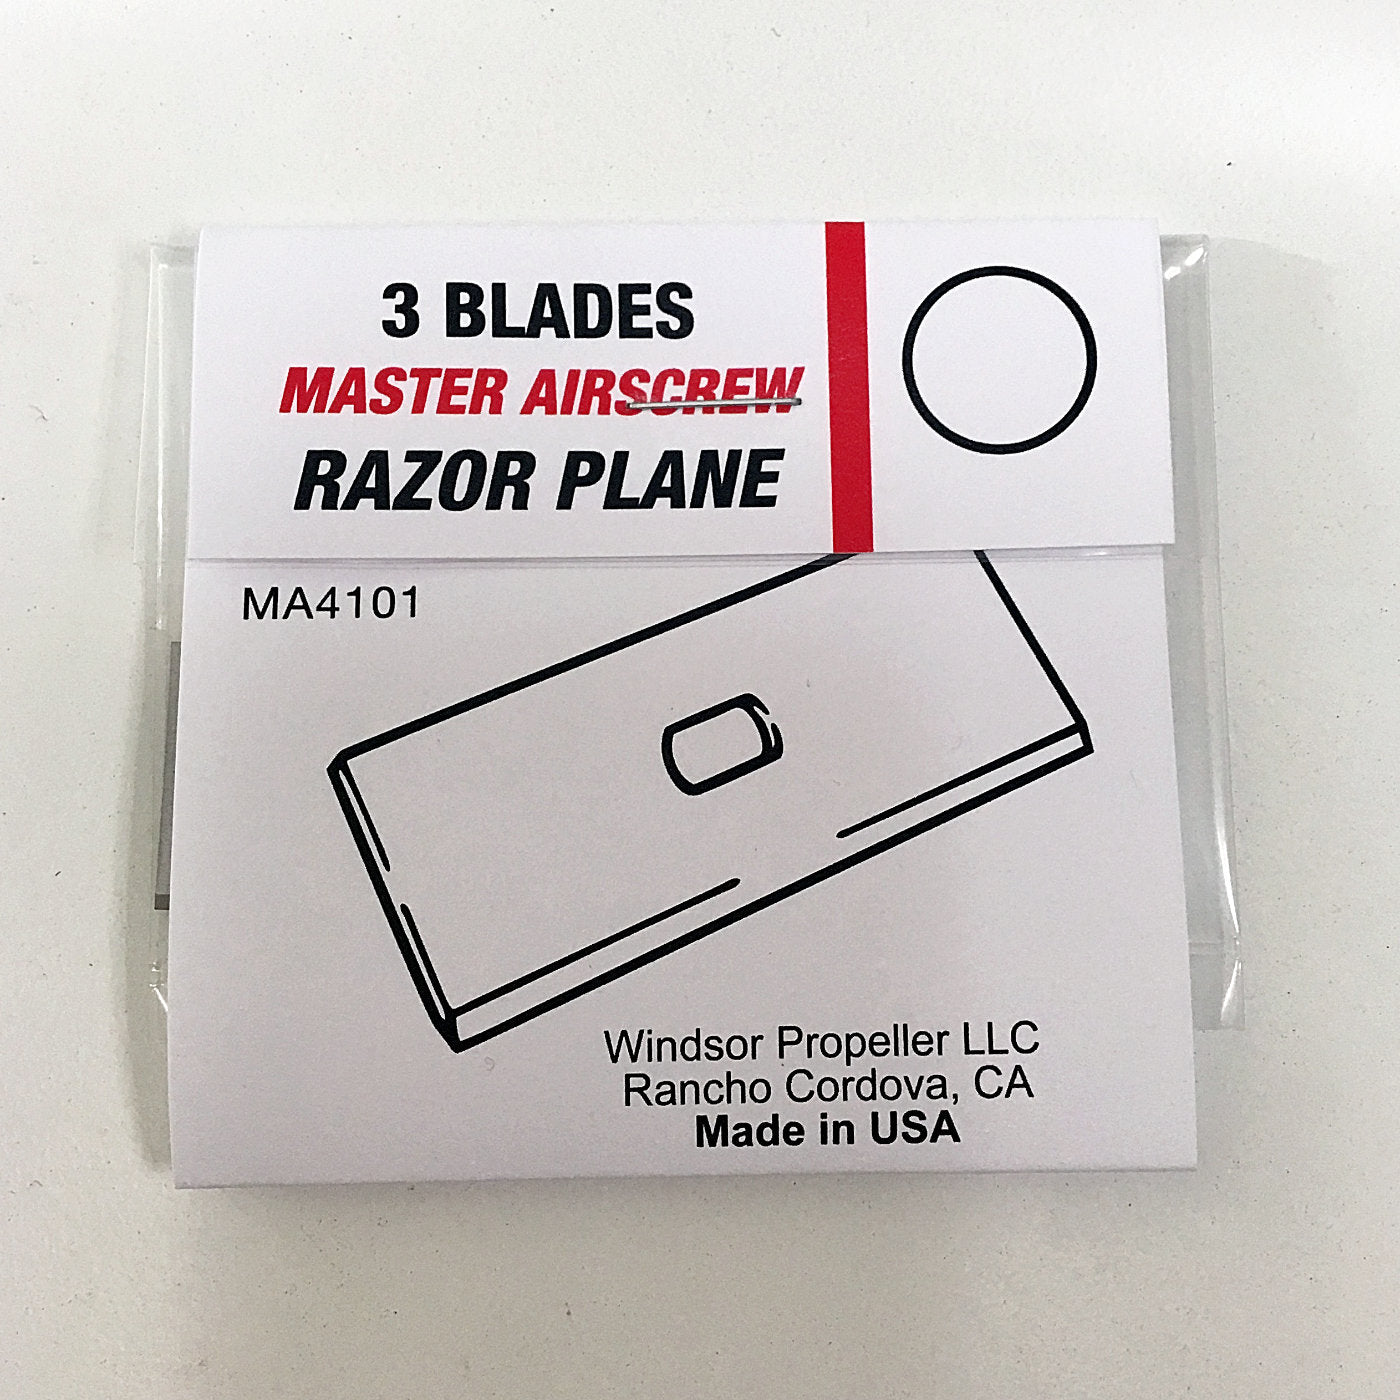 Razor Plane Replacement Blades - Master Airscrew